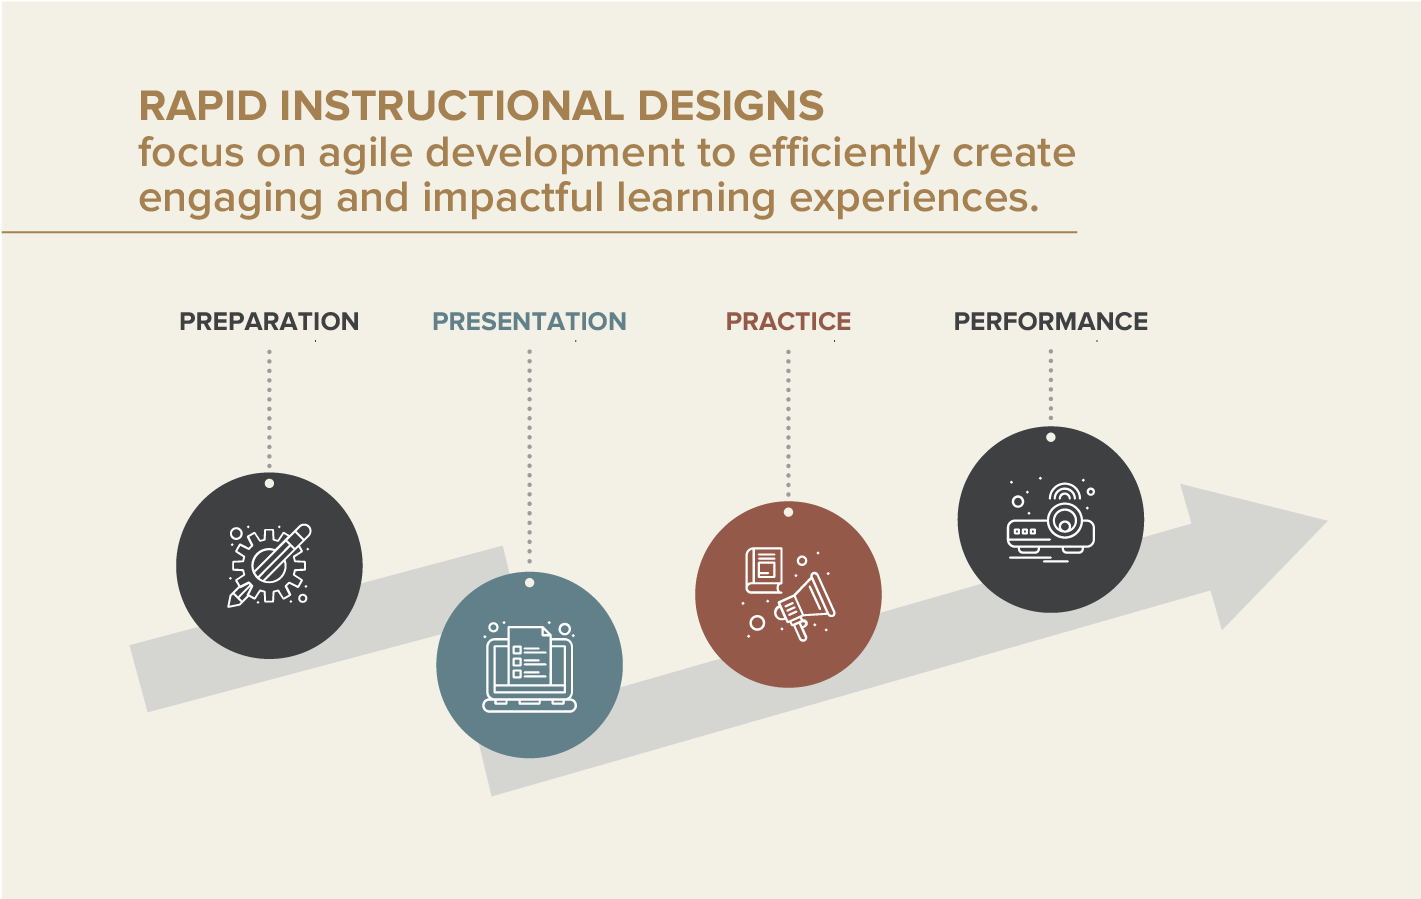 Rapid Instructional Design model visualisation